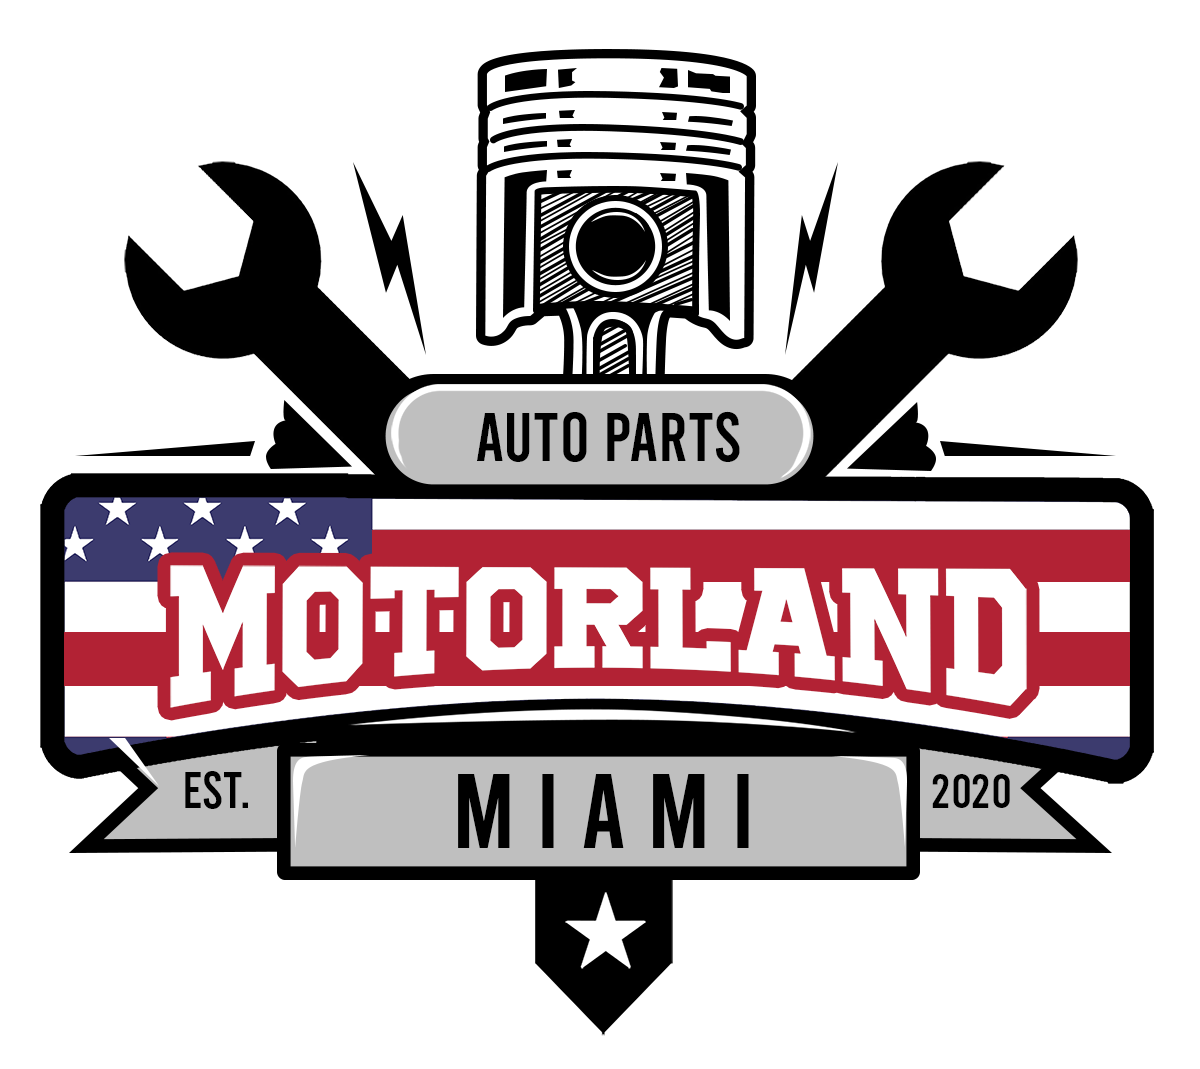 Motorland Miami